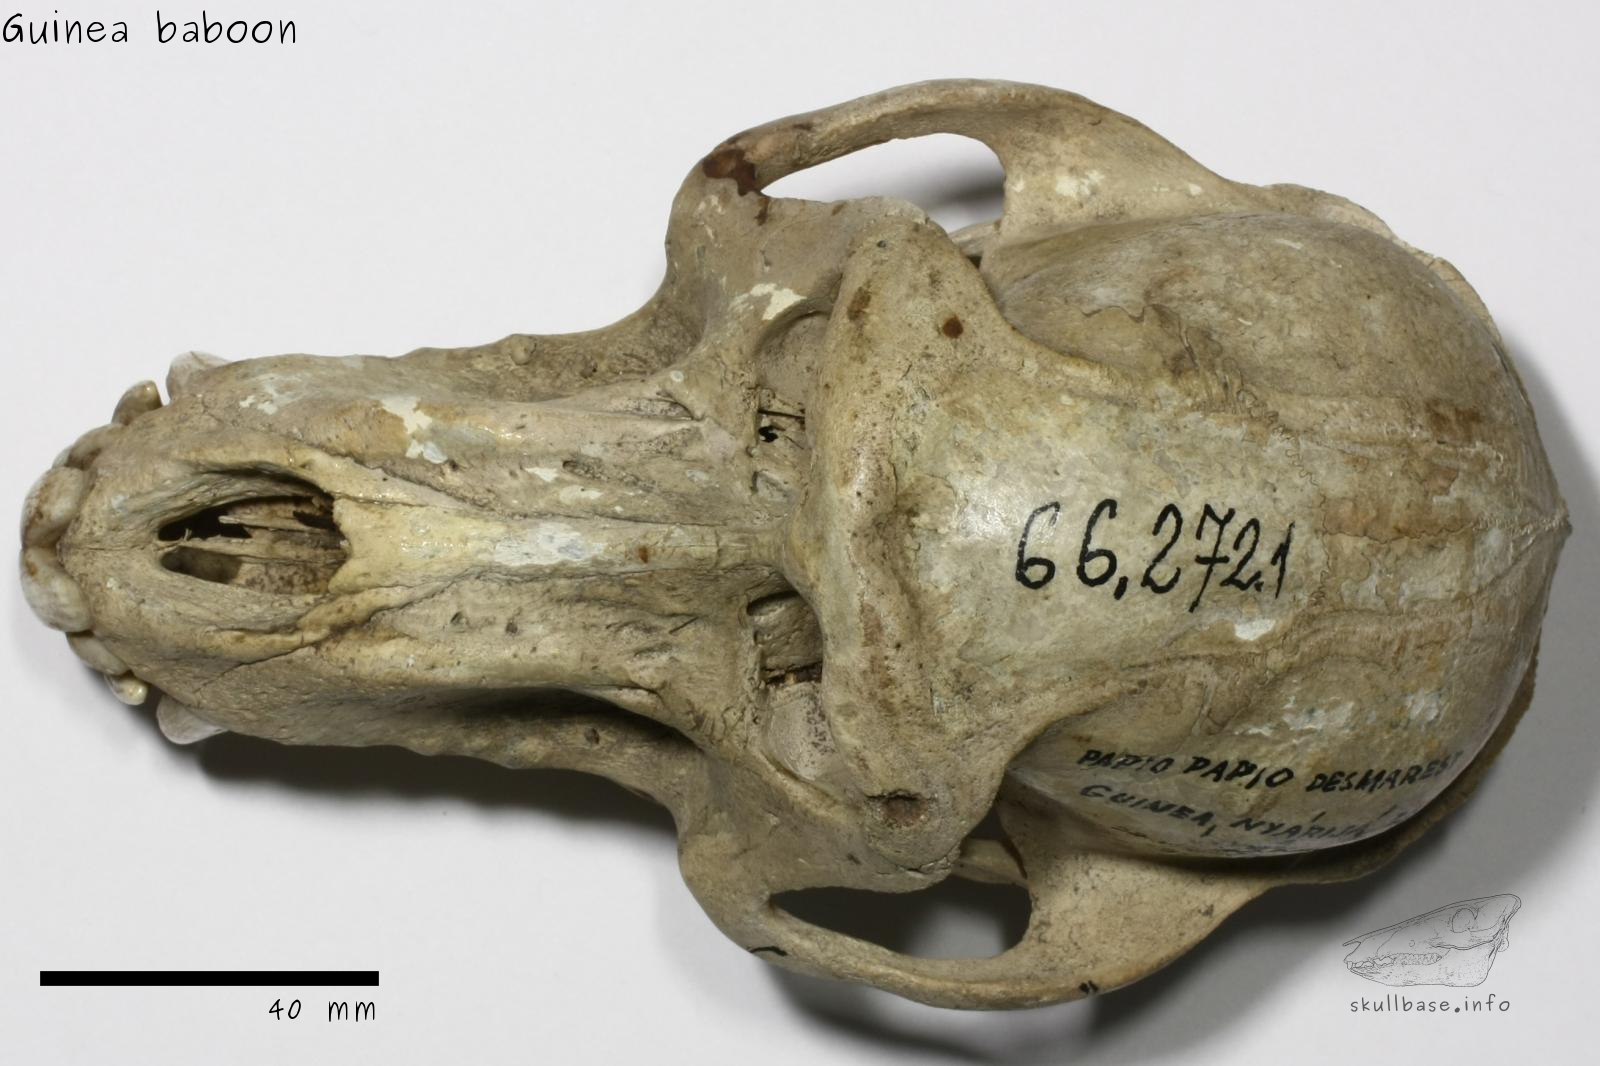 Guinea baboon (Papio papio) skull dorsal view